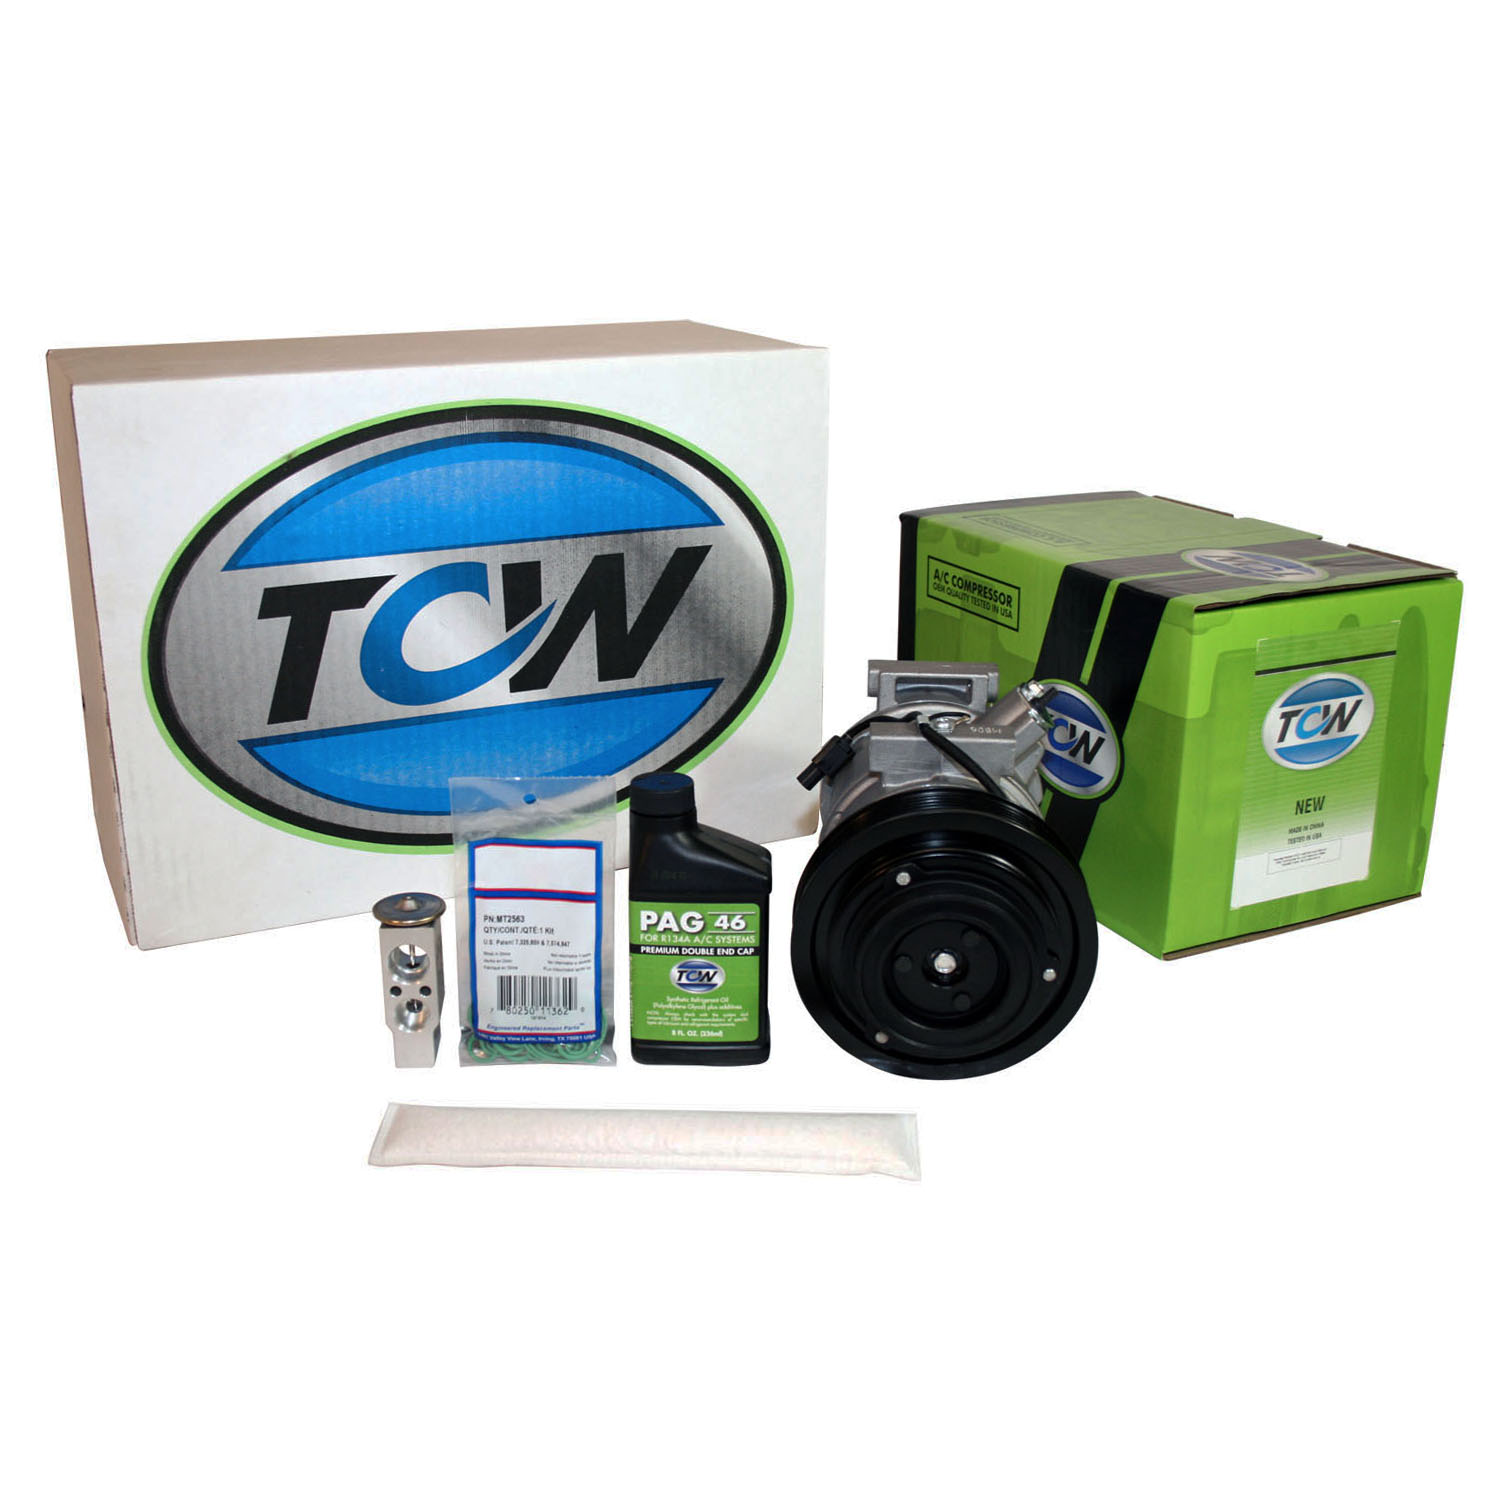 TCW Vehicle A/C Kit K1000400N New Product Image field_60b6a13a6e67c